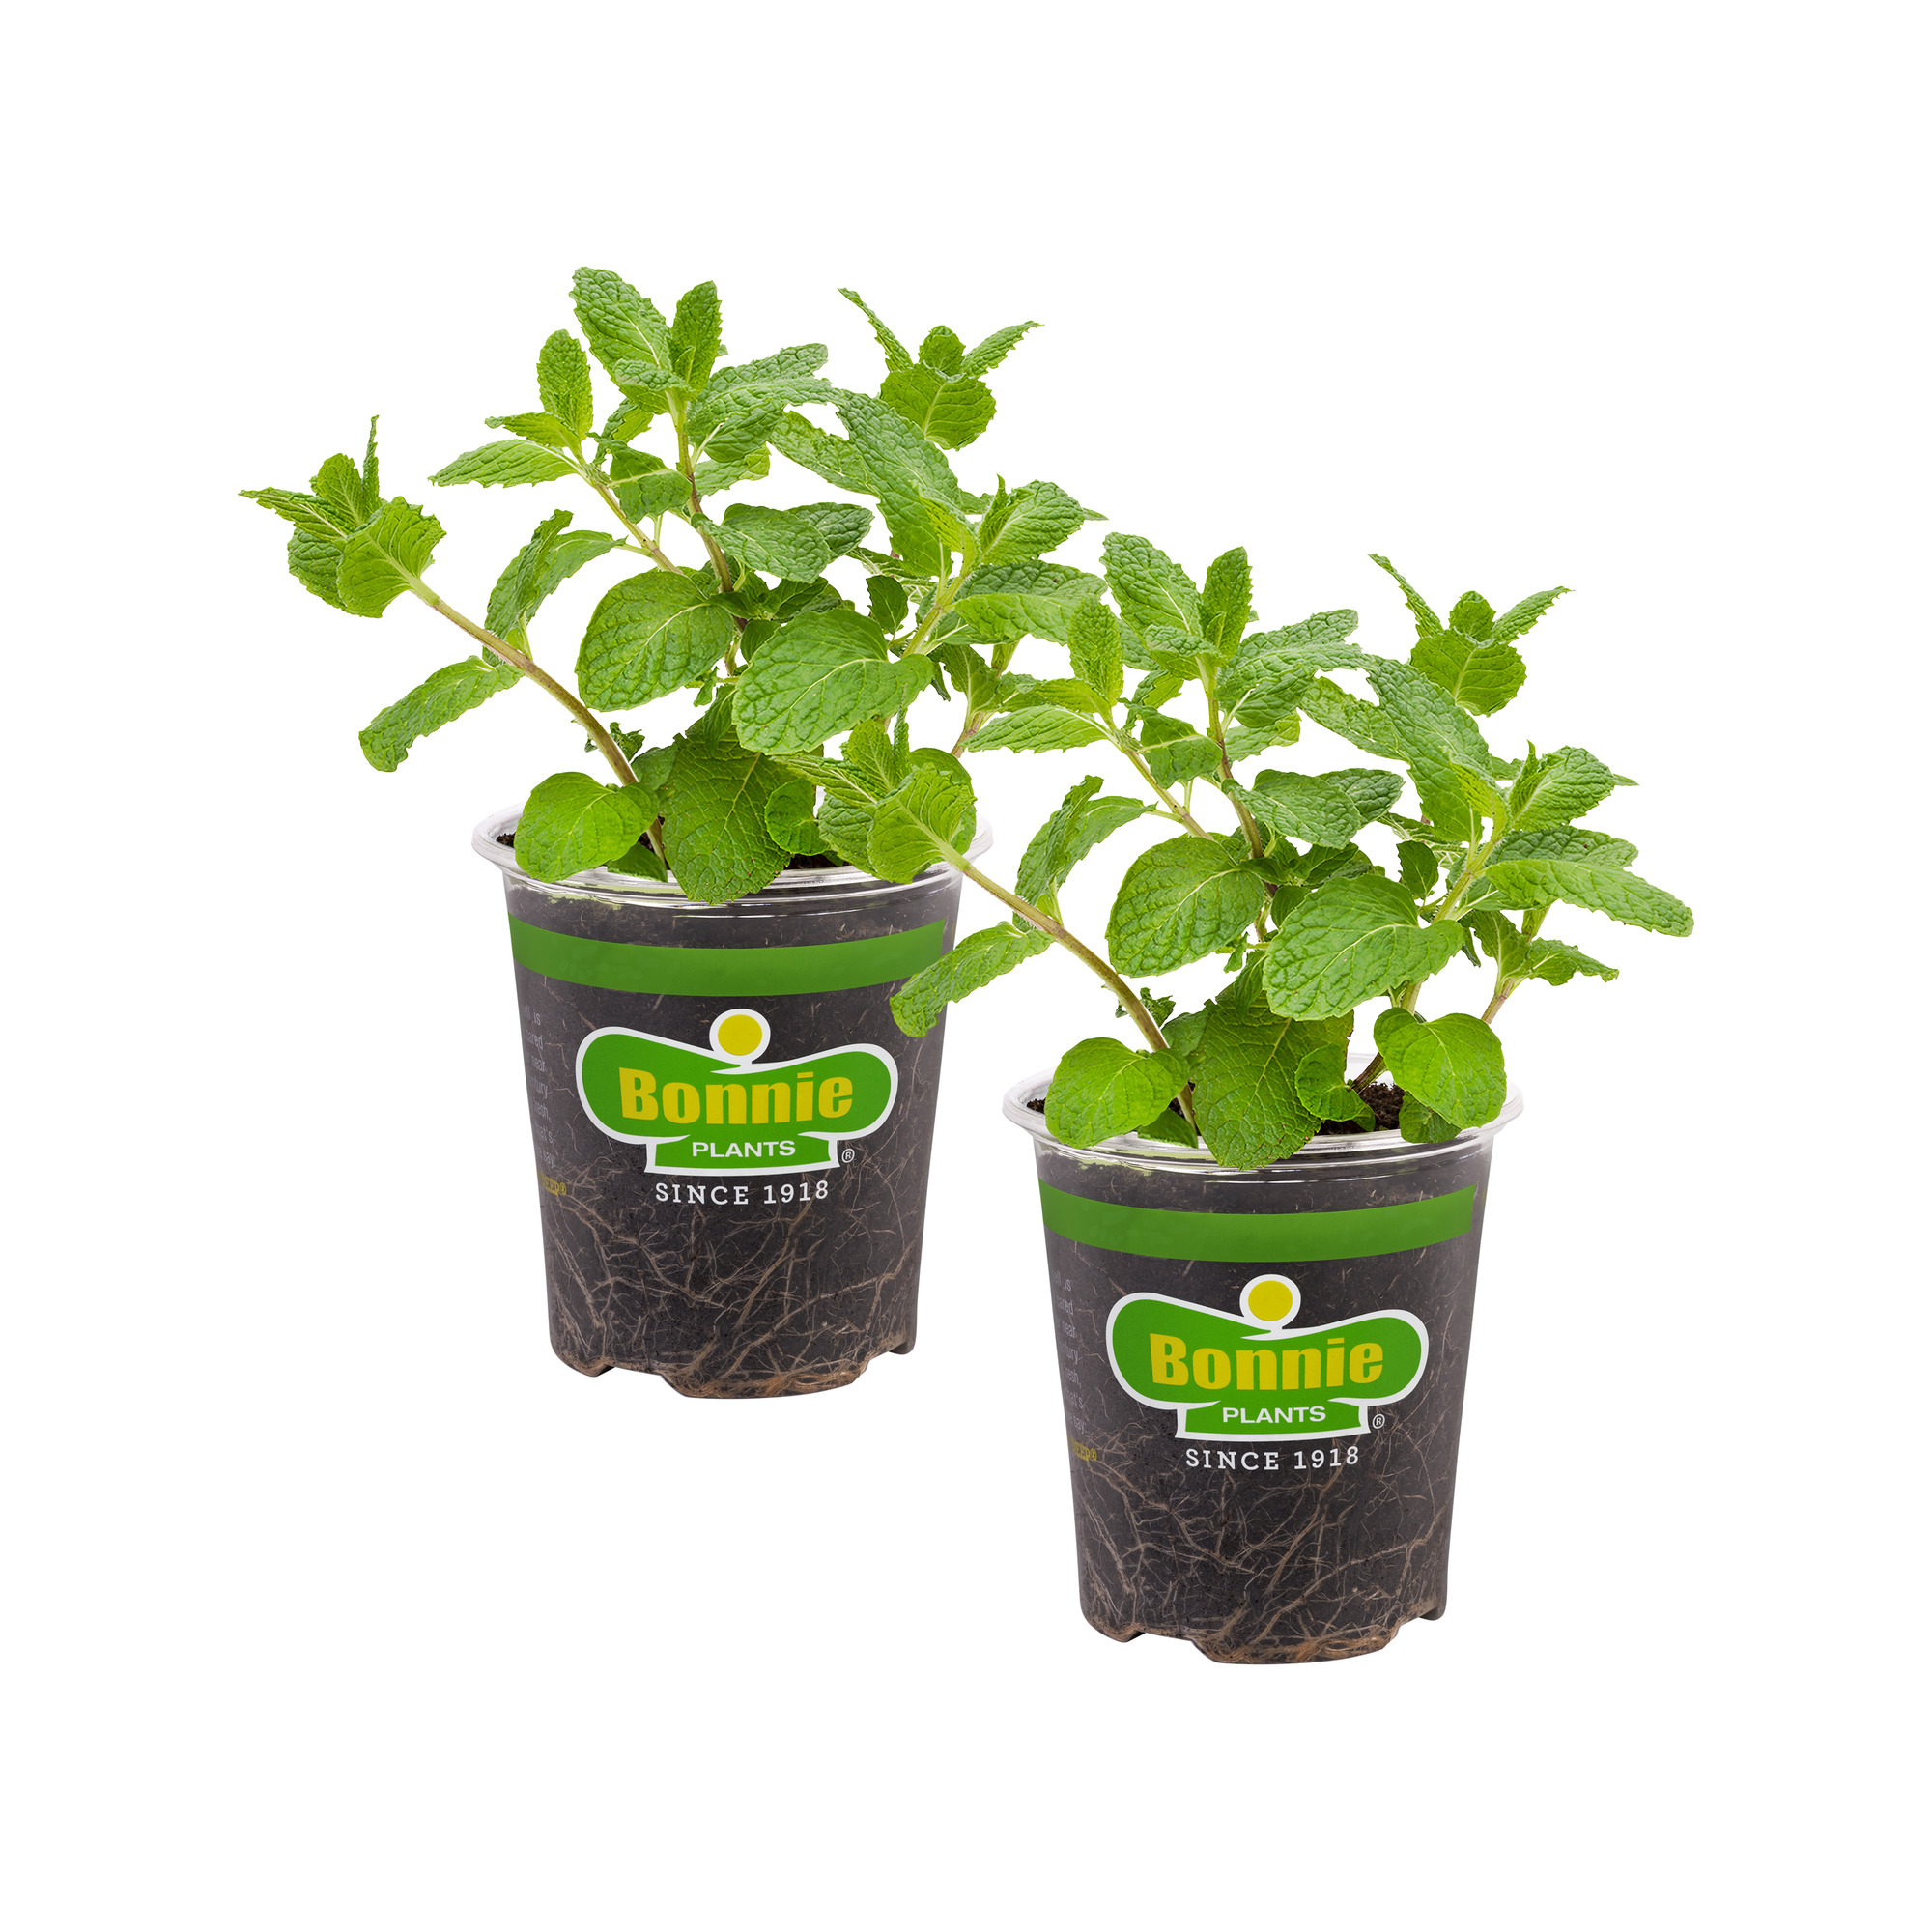 Bonnie Plants Sweet Mint 19.3 oz. 2-Pack - image 1 of 10